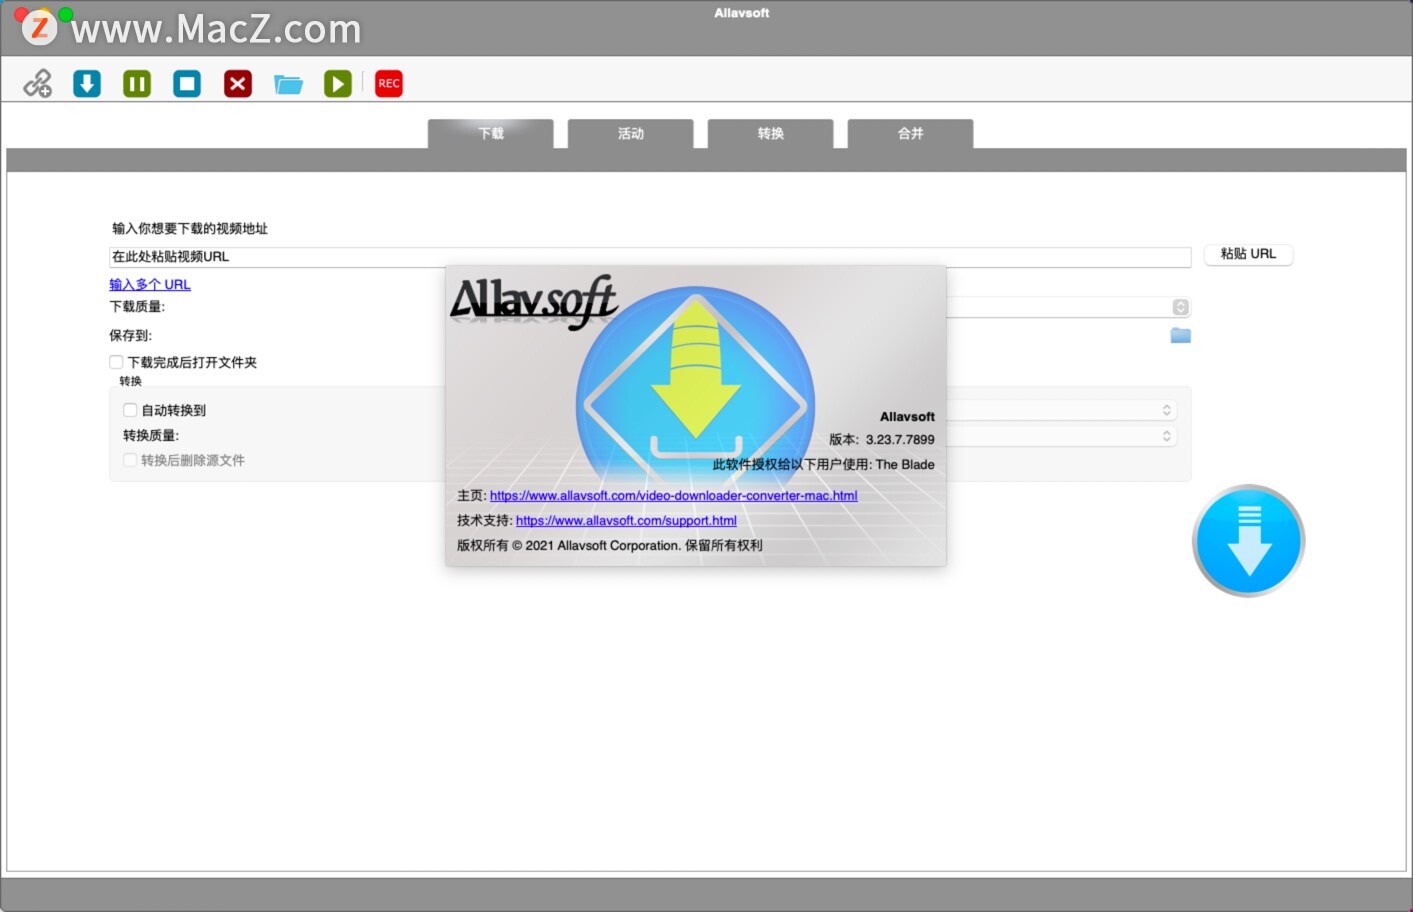 Allavsoft Video Downloader Converter For Mac 视频下载和格式转换 倪好 Nih的博客 程序员宝宝 程序员宝宝